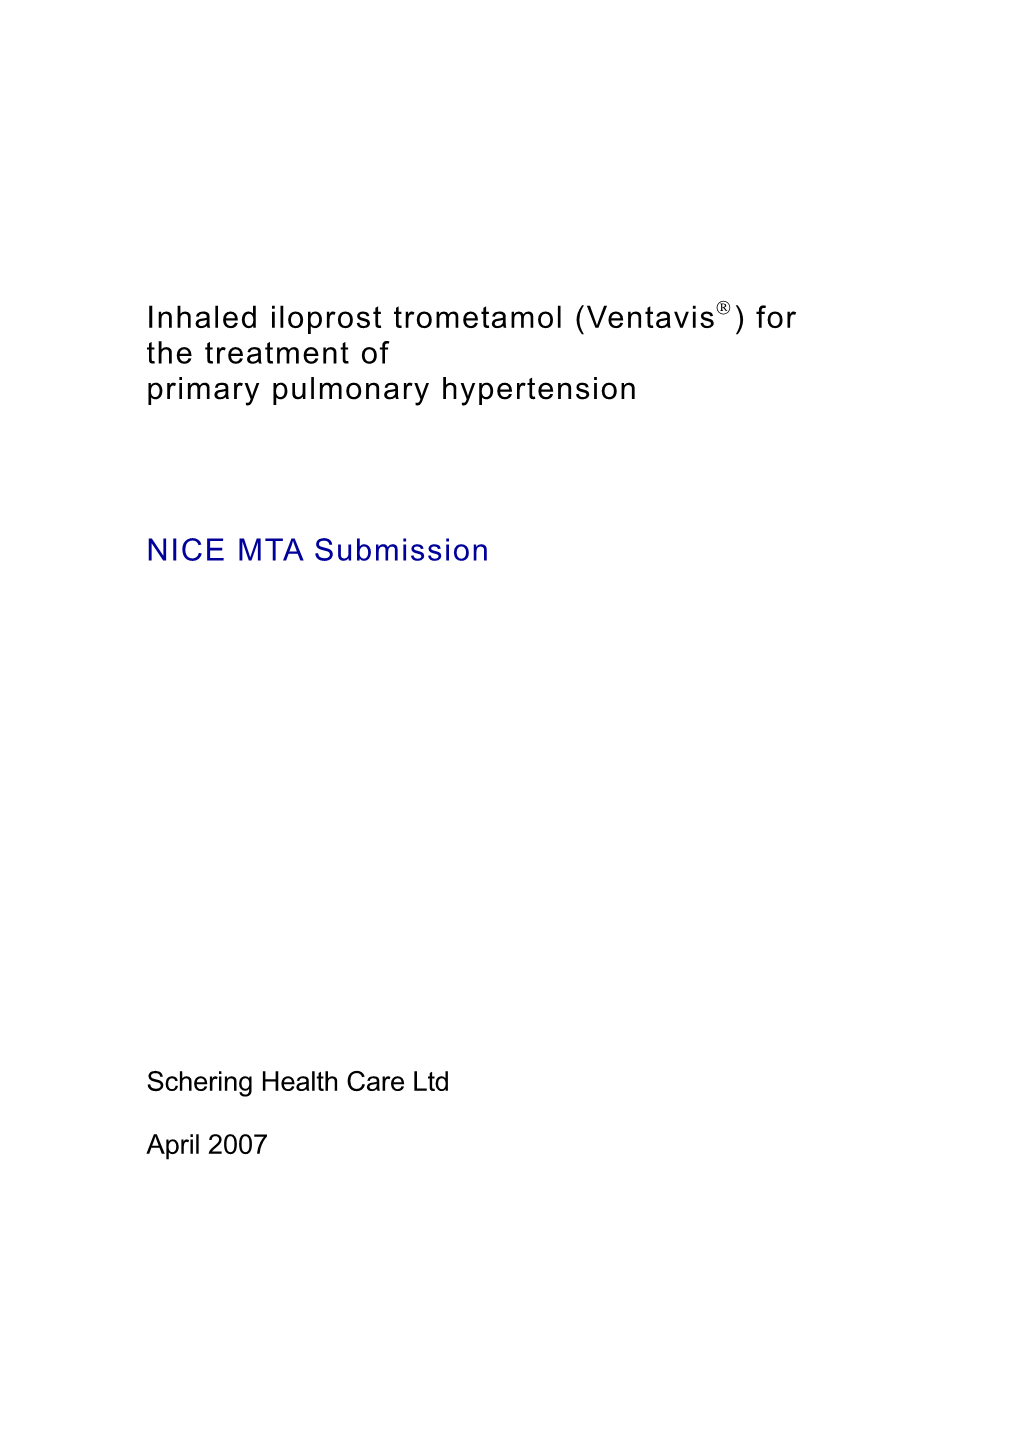 Inhaled Iloprost Trometamol (Ventavis ) for the Treatment of Primary Pulmonary Hypertension NICE MTA Submission